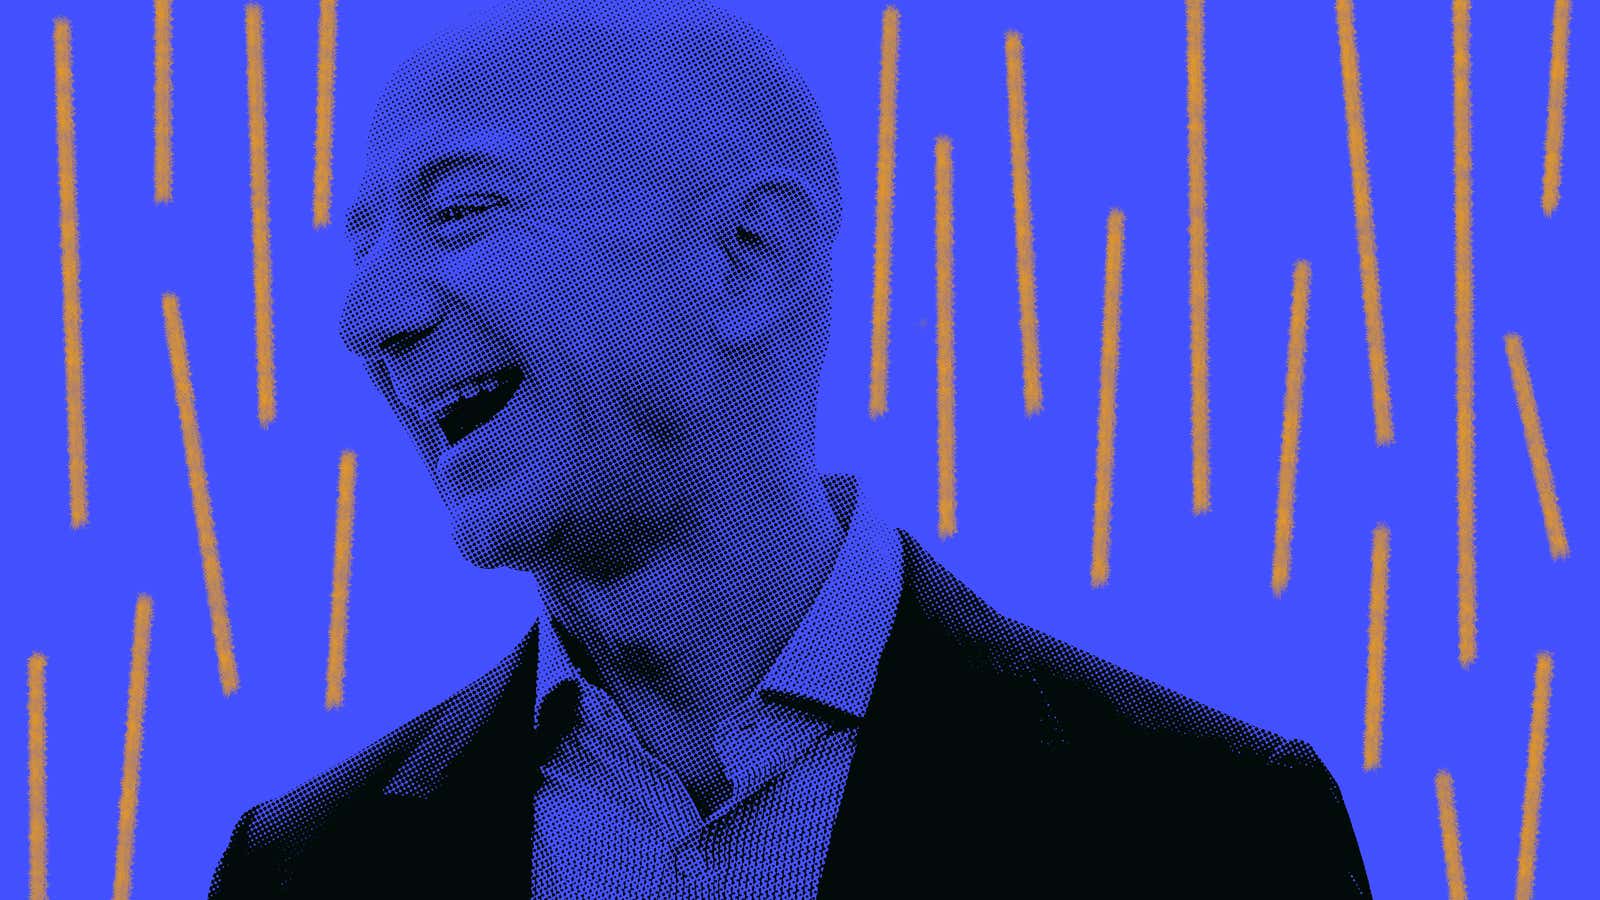 Jeff Bezos’s legacy, according to 11 experts